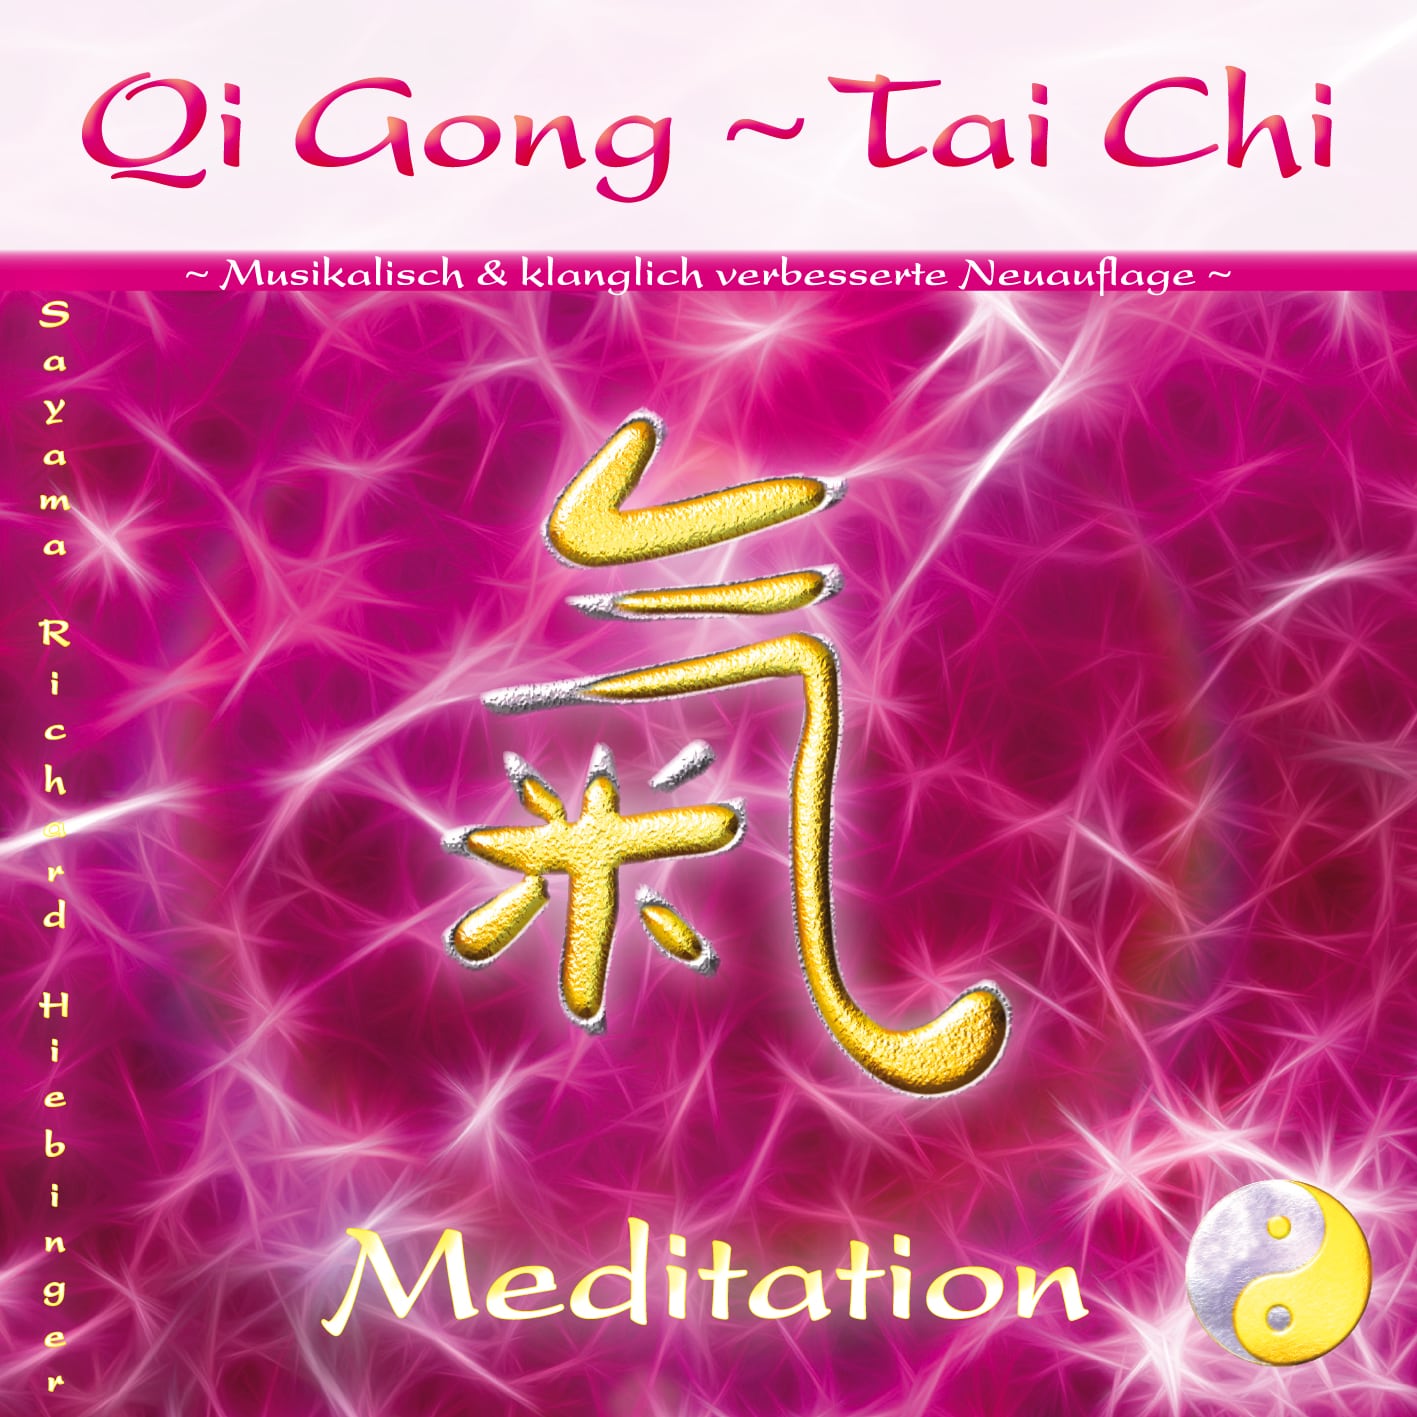 CD Titelbild Qi Gong ~ Tai Chi ~ Meditation von Sayama Music Richard Hiebinger. https://www.sayama-music.de/cds/qi-gong-tai-chi-meditation/